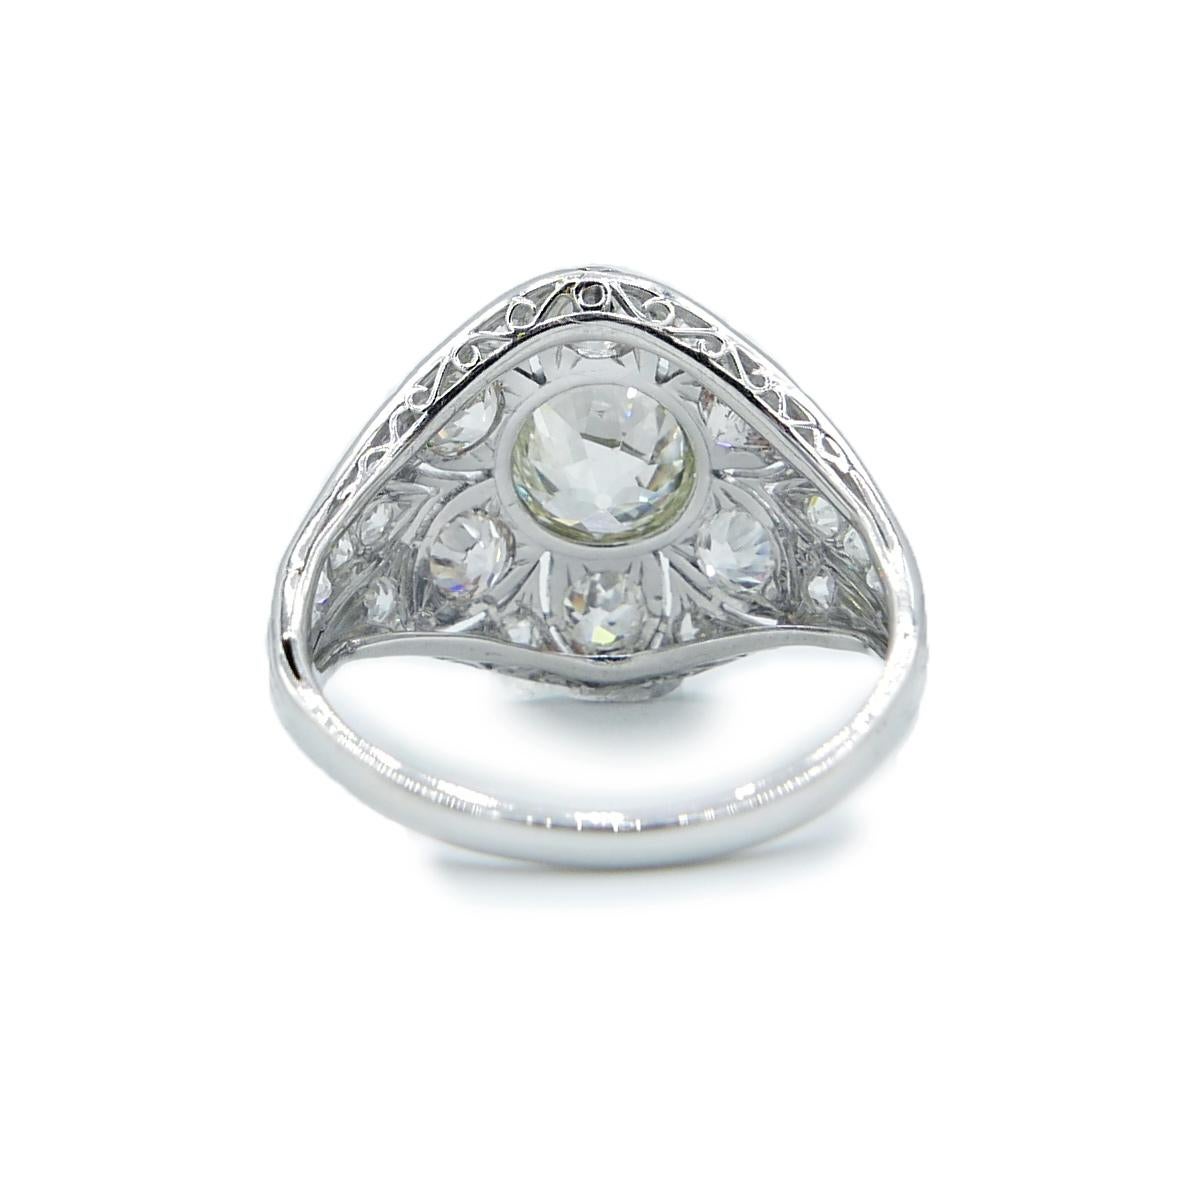 2.8 carat diamond ring